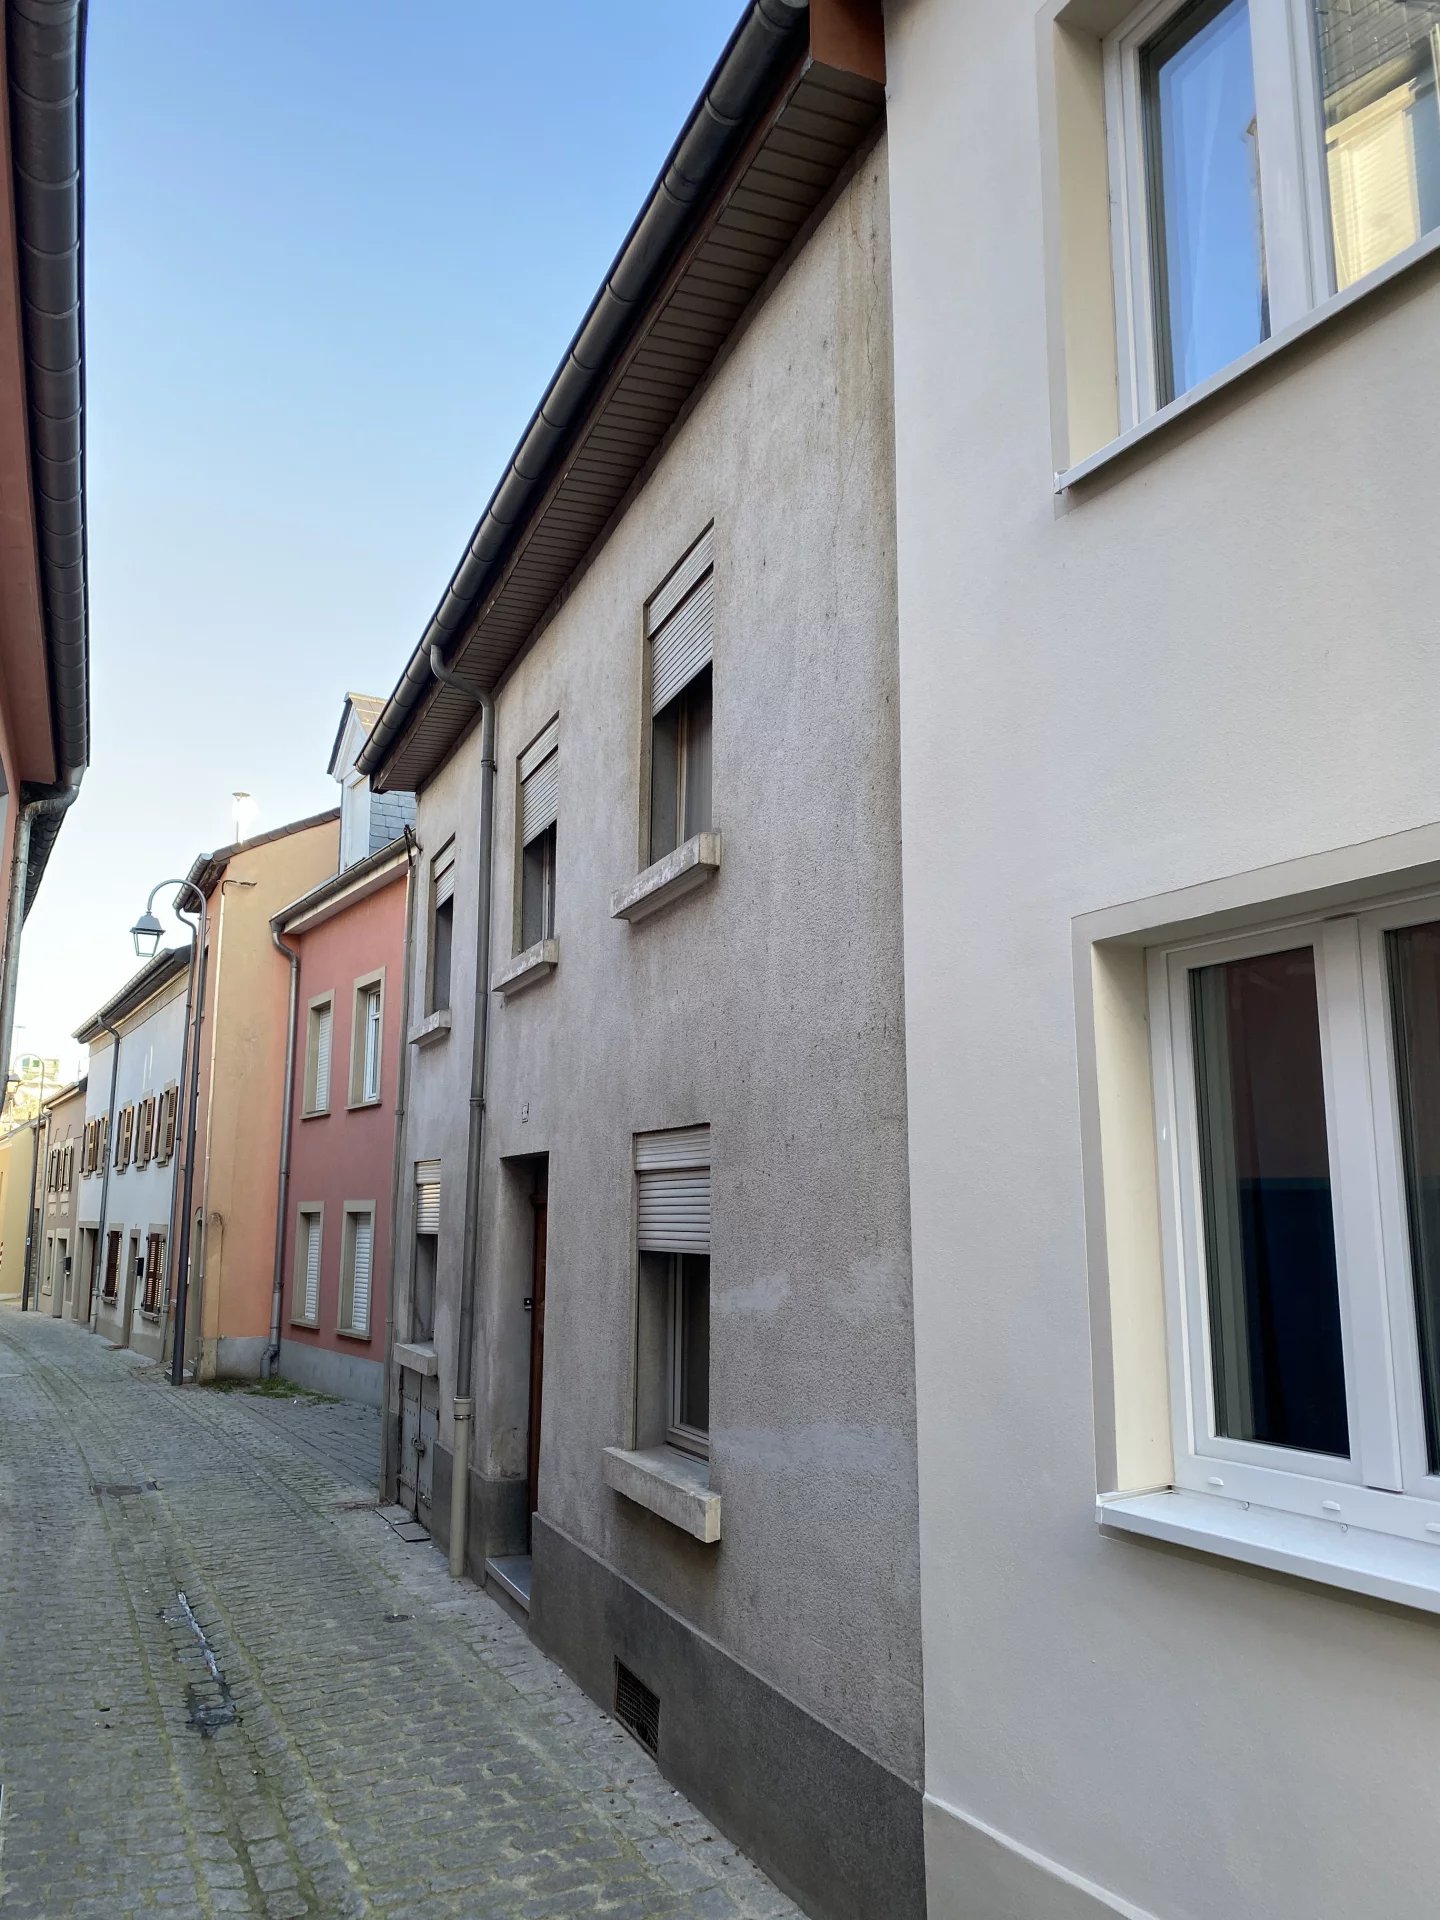 House to renovate in the centre of Grevenmacher